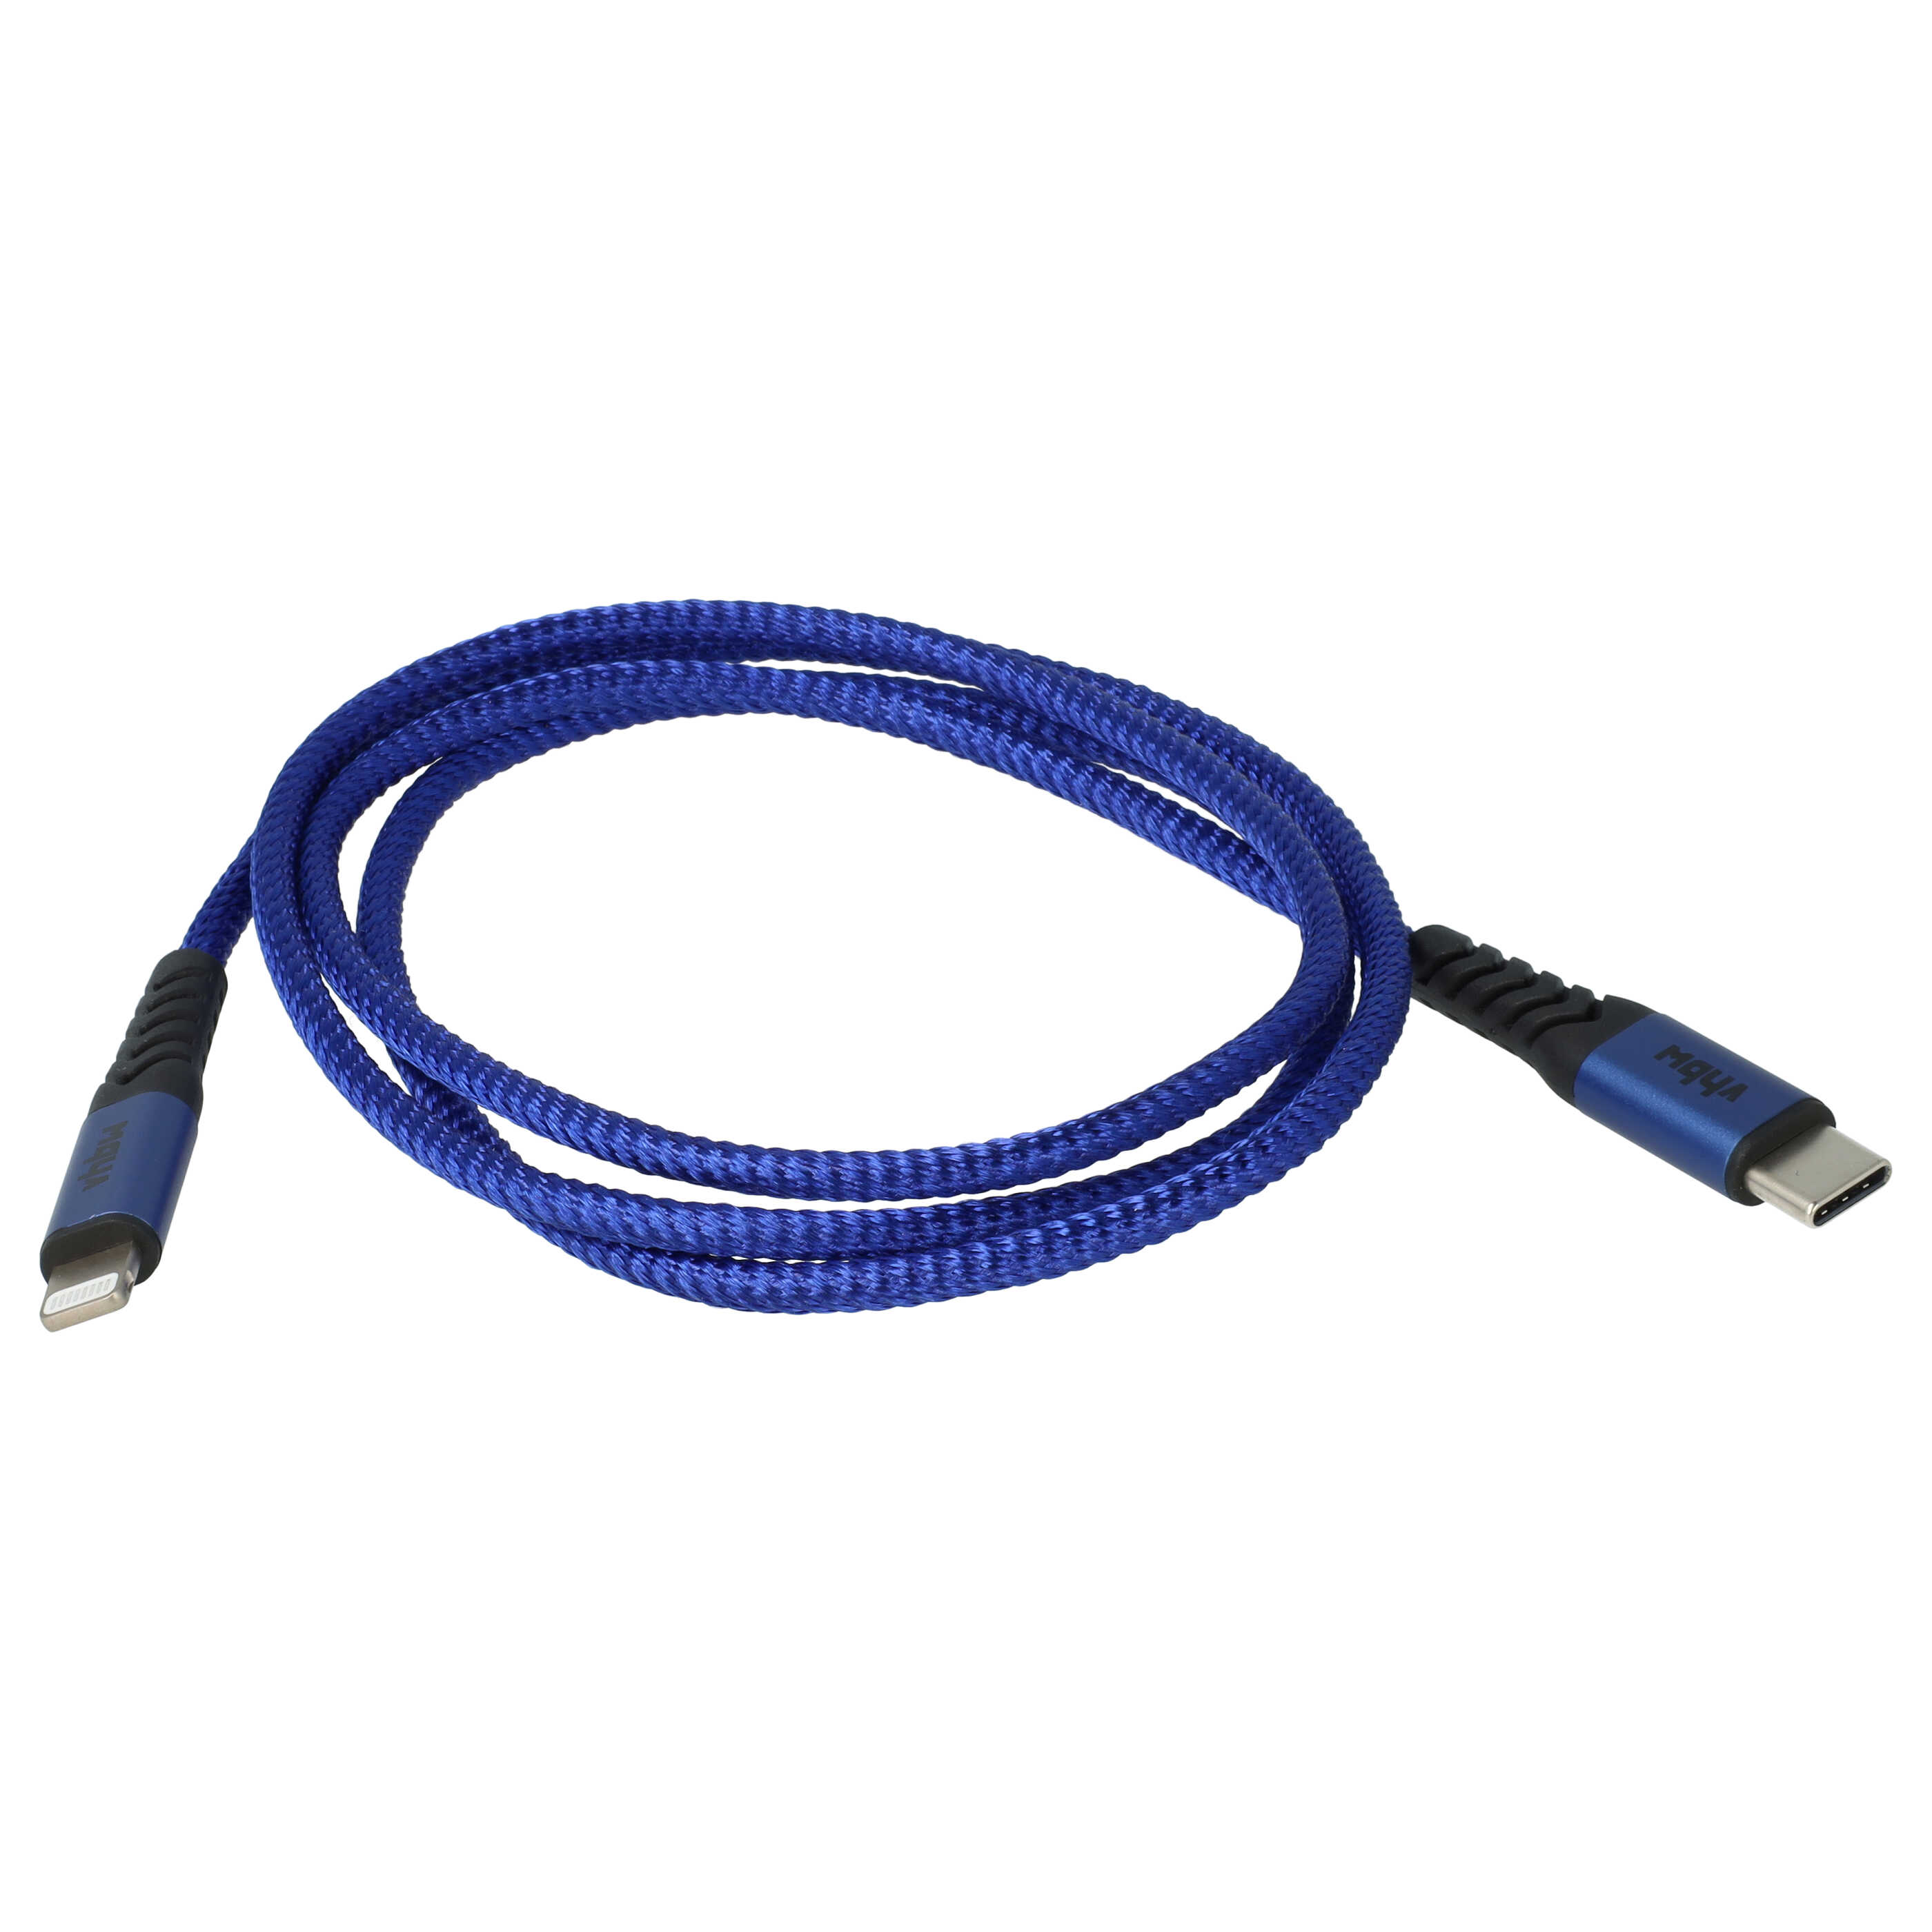 Câble Lightning vers USB C, Thunderbolt 3 pour iOS Apple MacBook - noir / bleu, 100cm